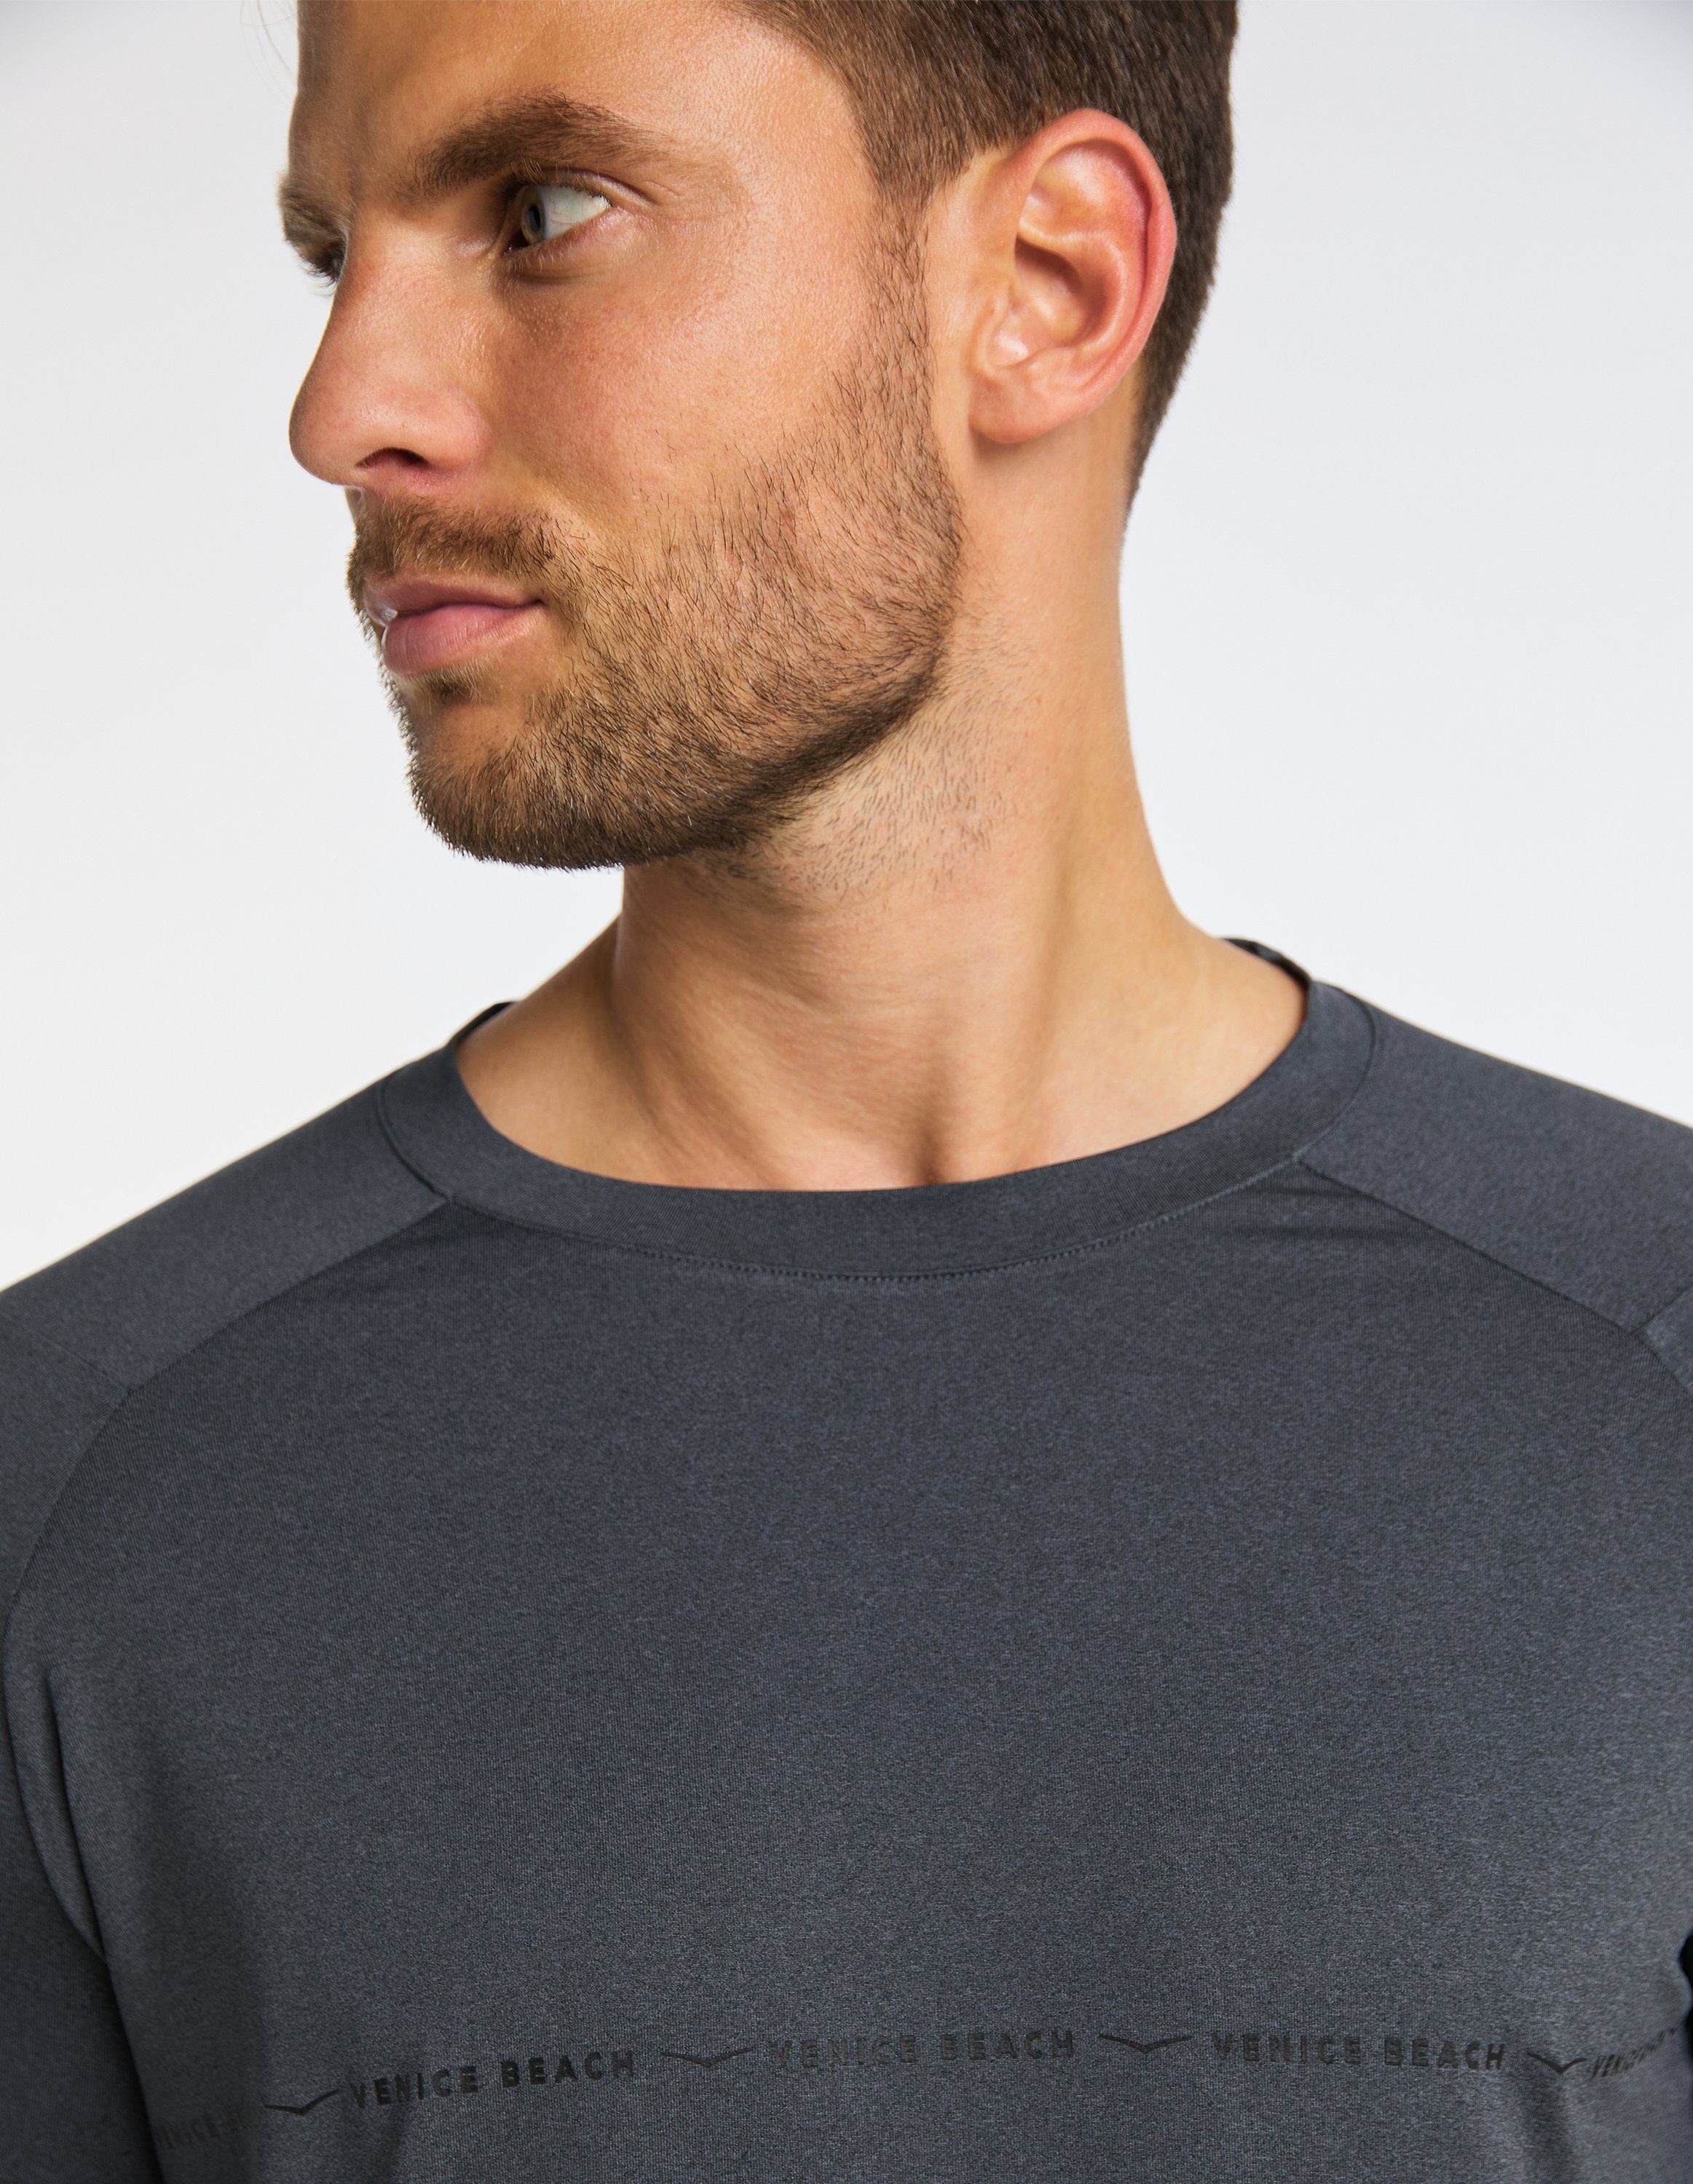 Venice Beach T-Shirt carbon grey CLAY VB Men melange T-Shirt